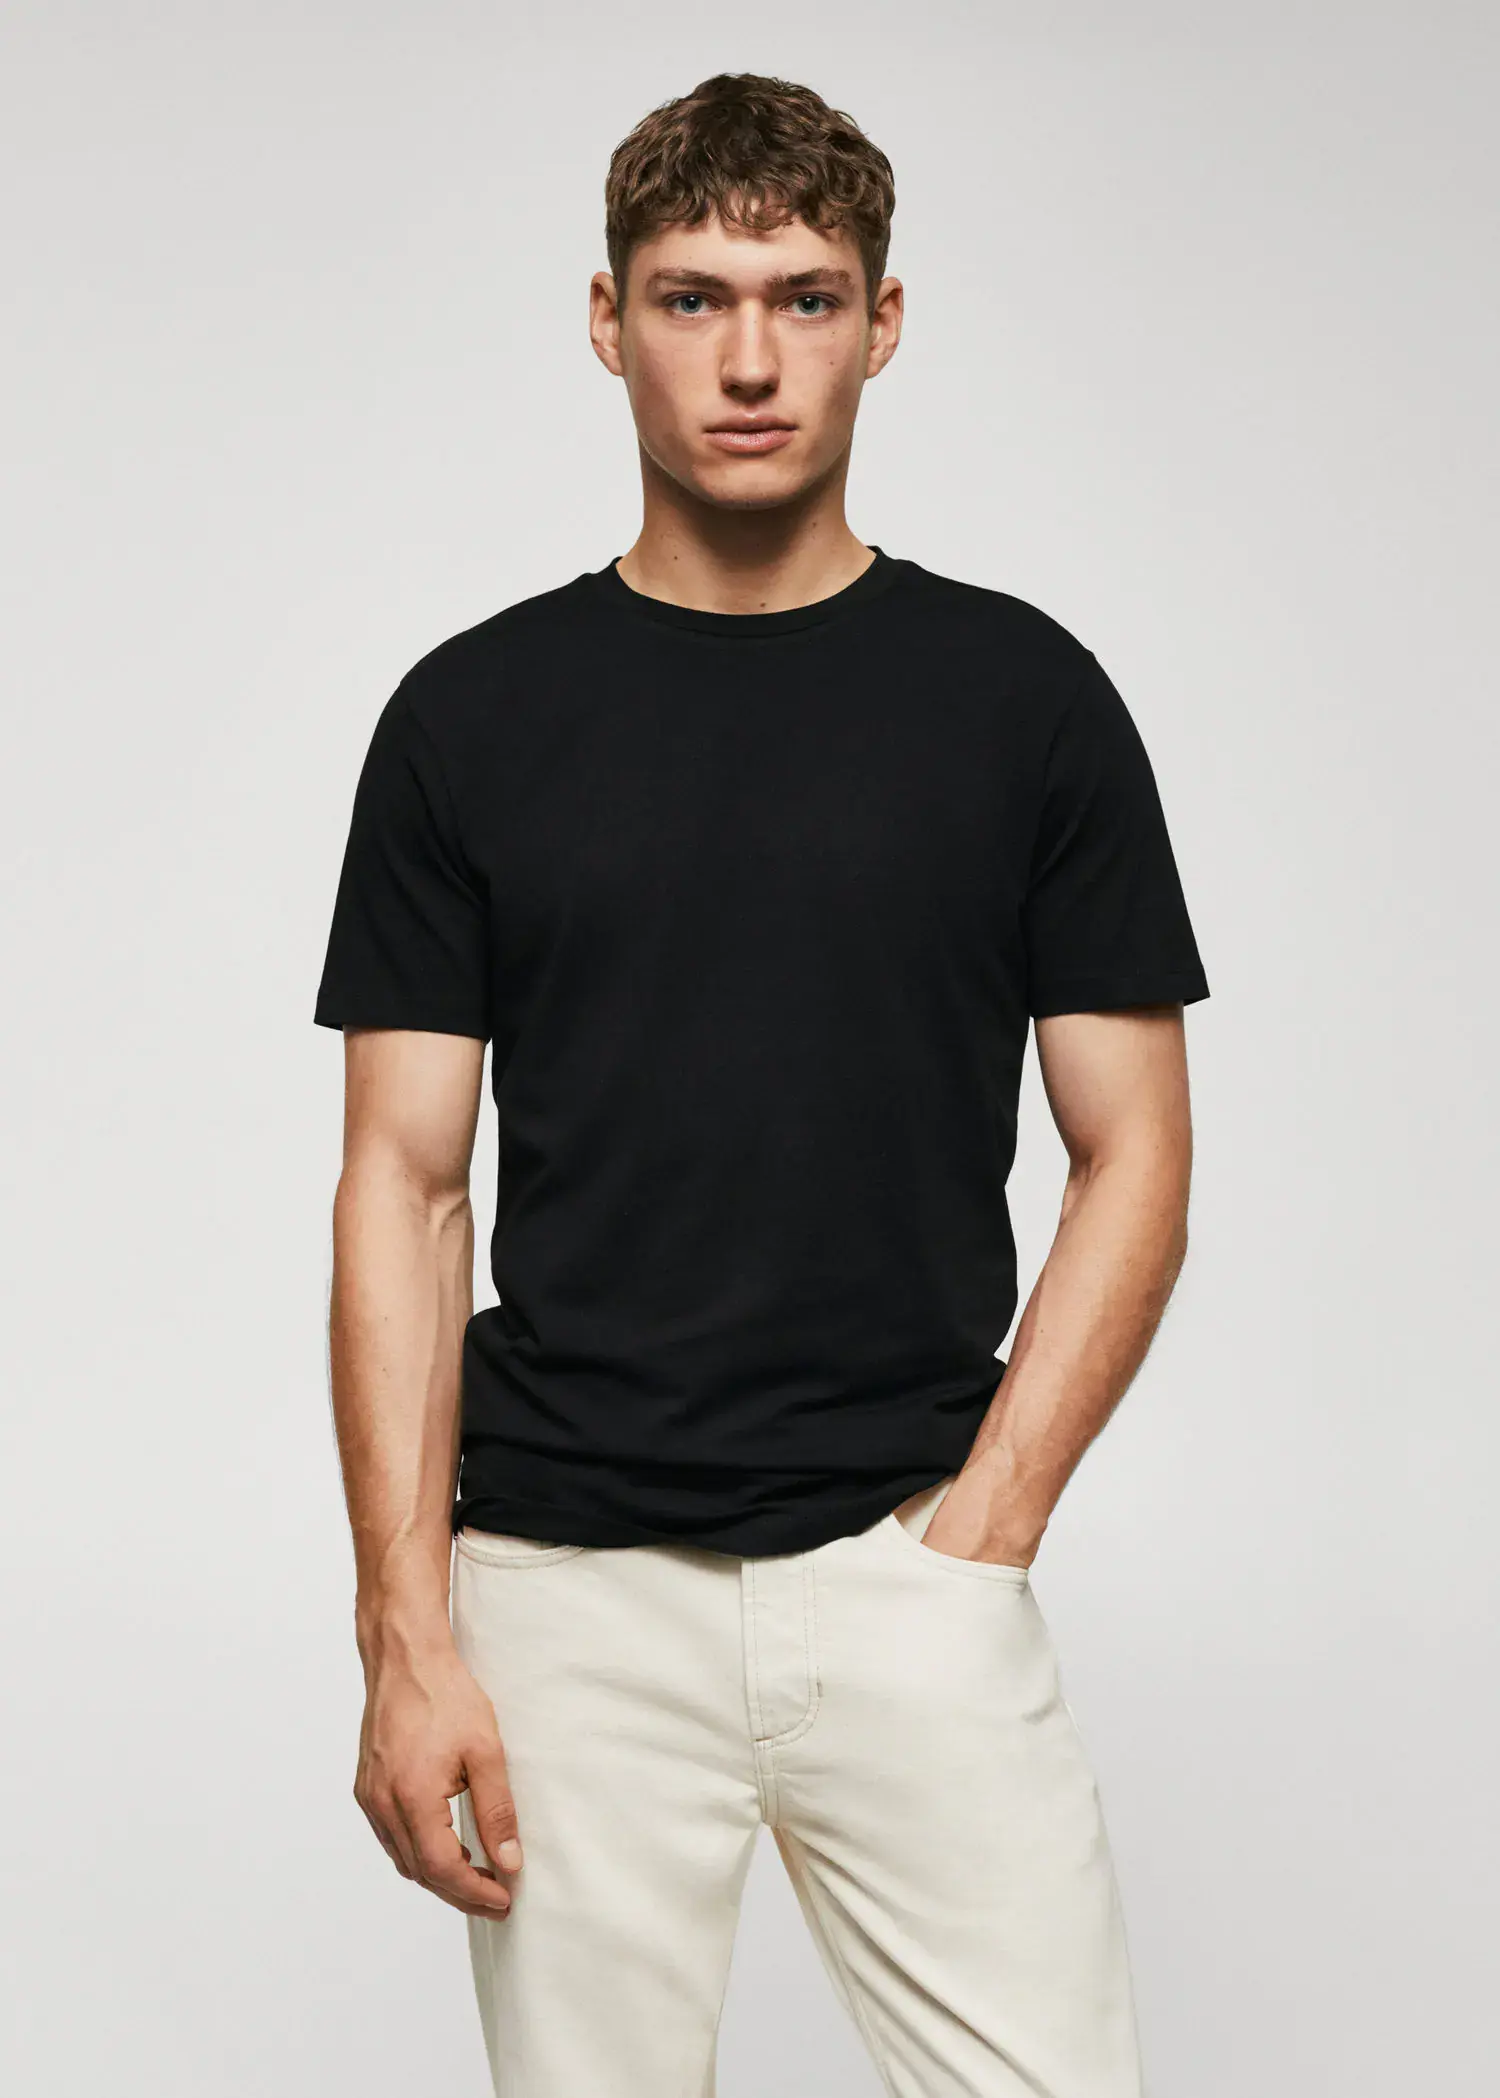 Mango Basic lightweight cotton t-shirt. a man in a black shirt and white shorts. 